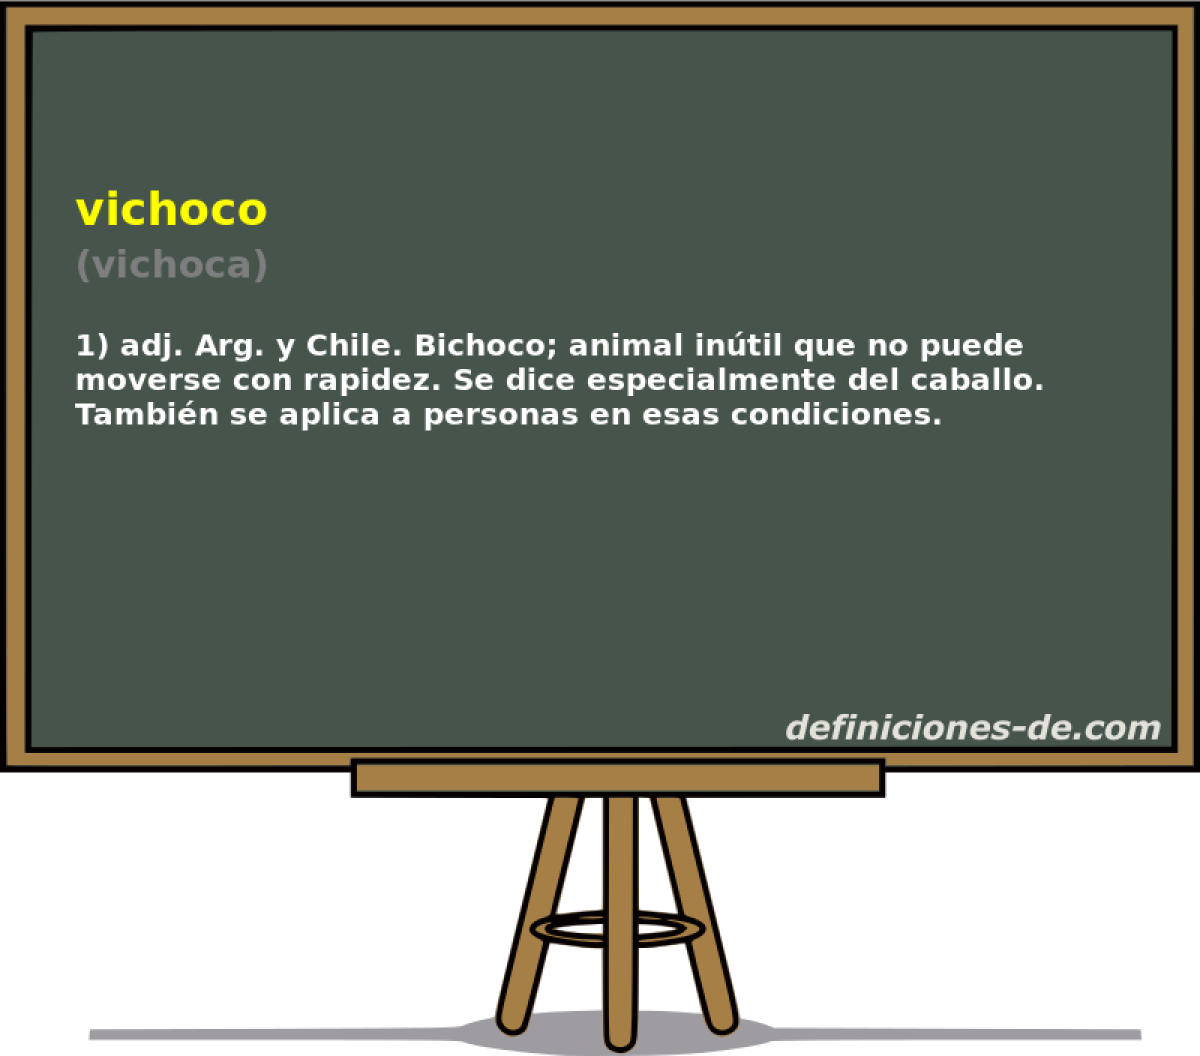 vichoco (vichoca)